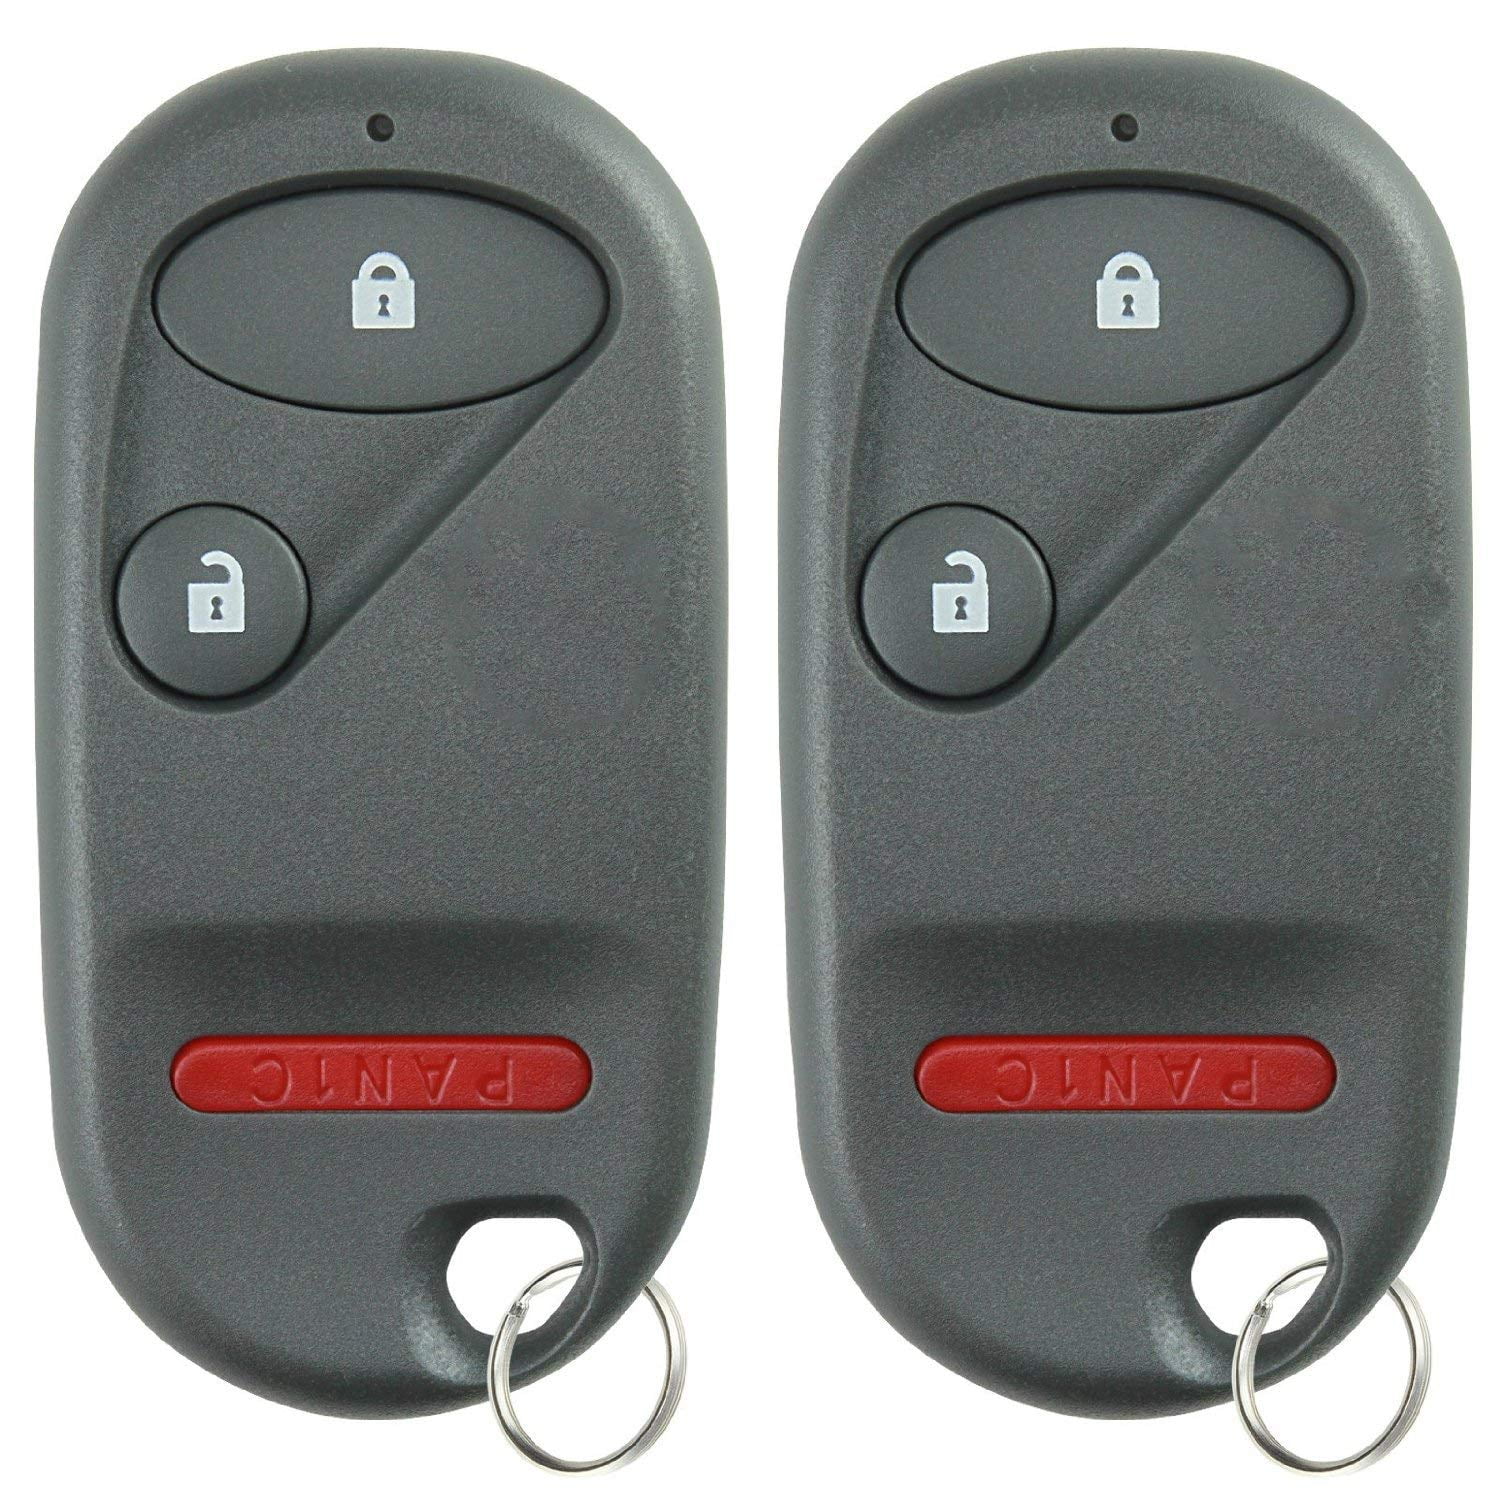 2 for 2002 Honda Civic Si Keyless Entry Remote Fob Car Key 